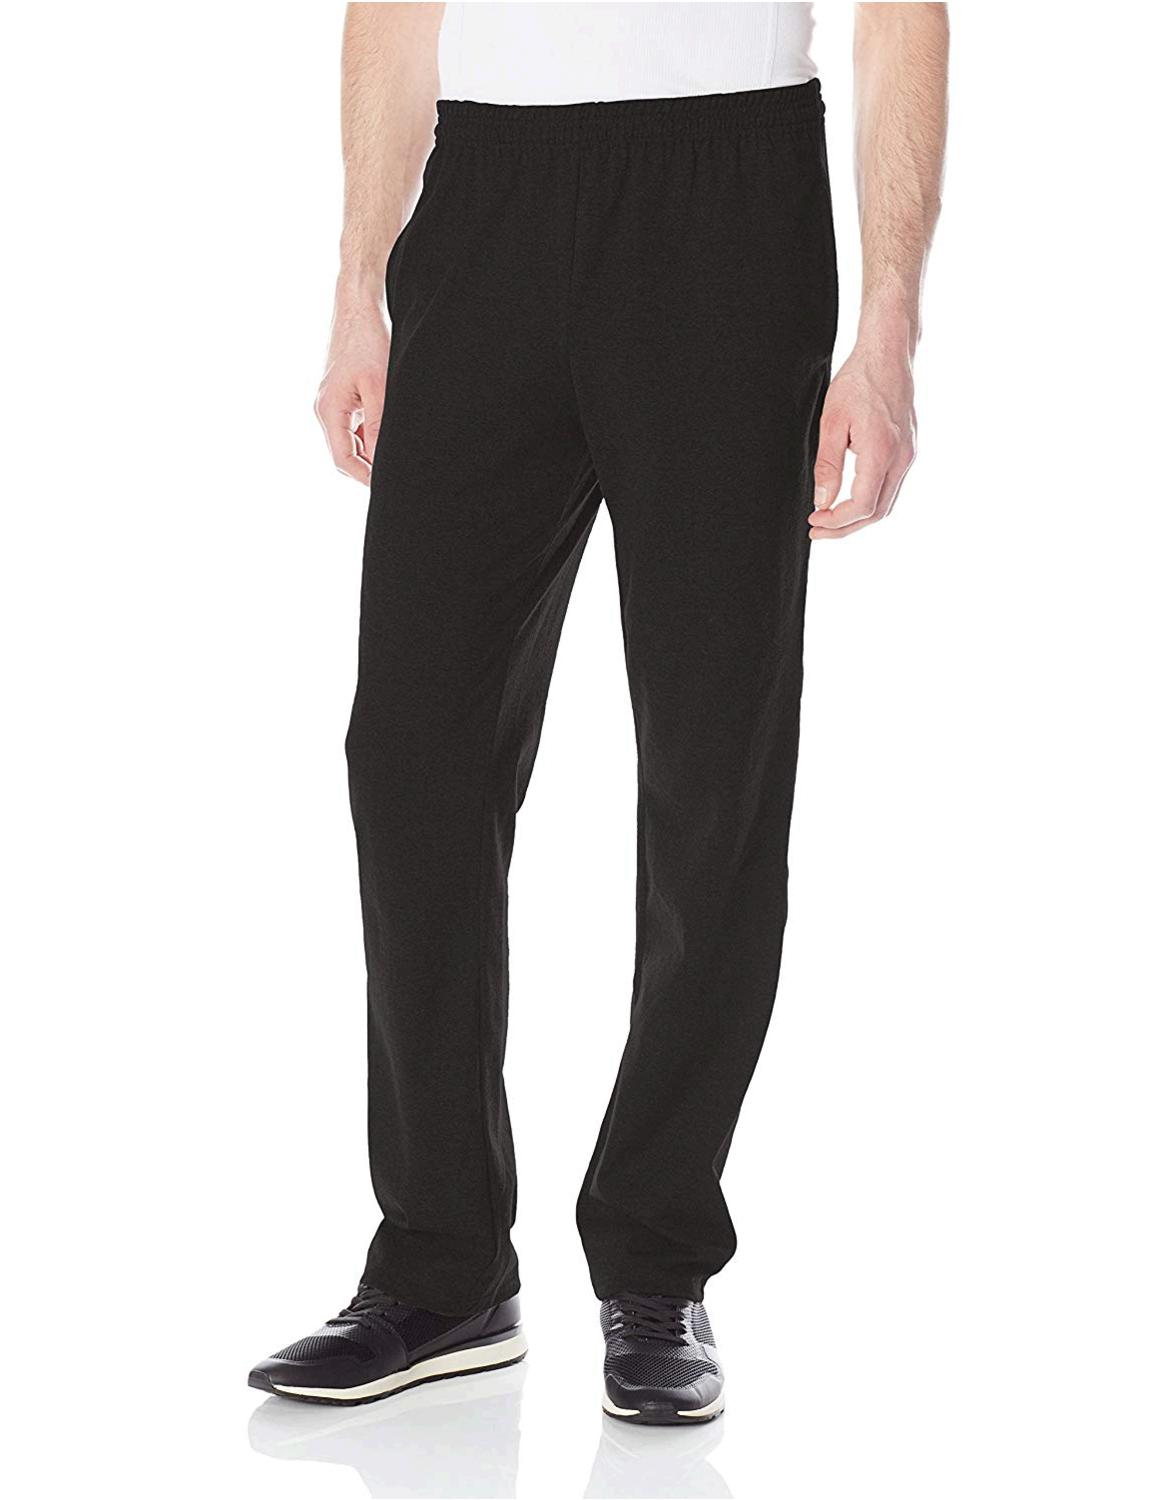 Men's Jersey Pant, Black, Medium, Black, Size Medium WAe7 | eBay